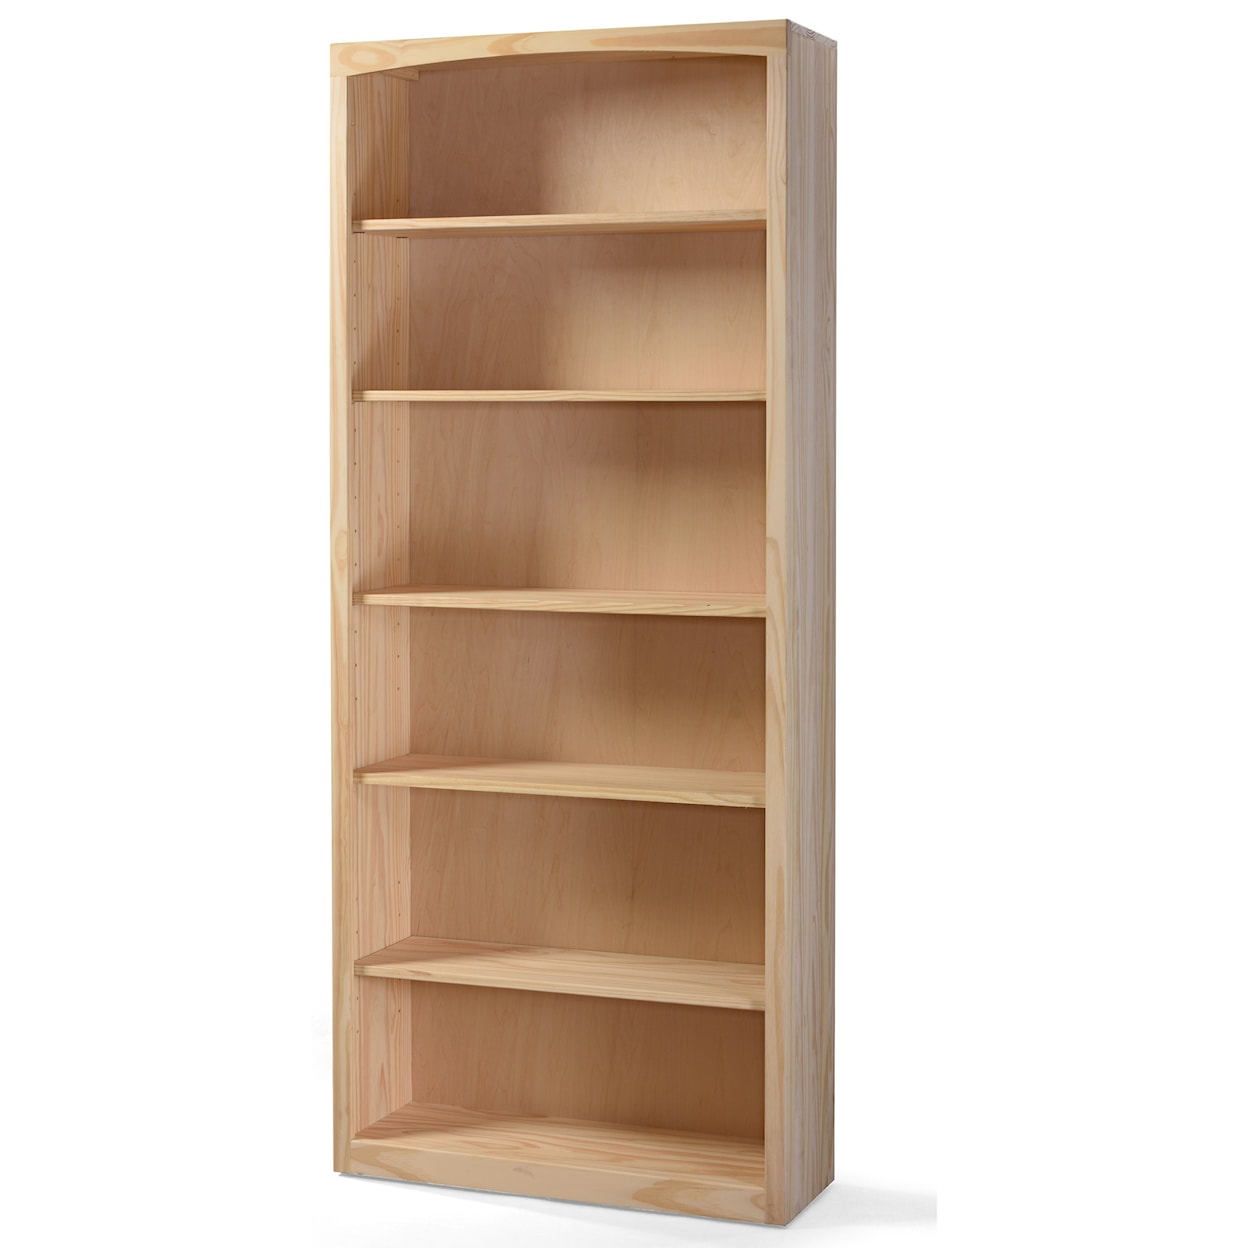 Archbold Furniture Pine Bookcases Customizable 36 X 84 Bookcase